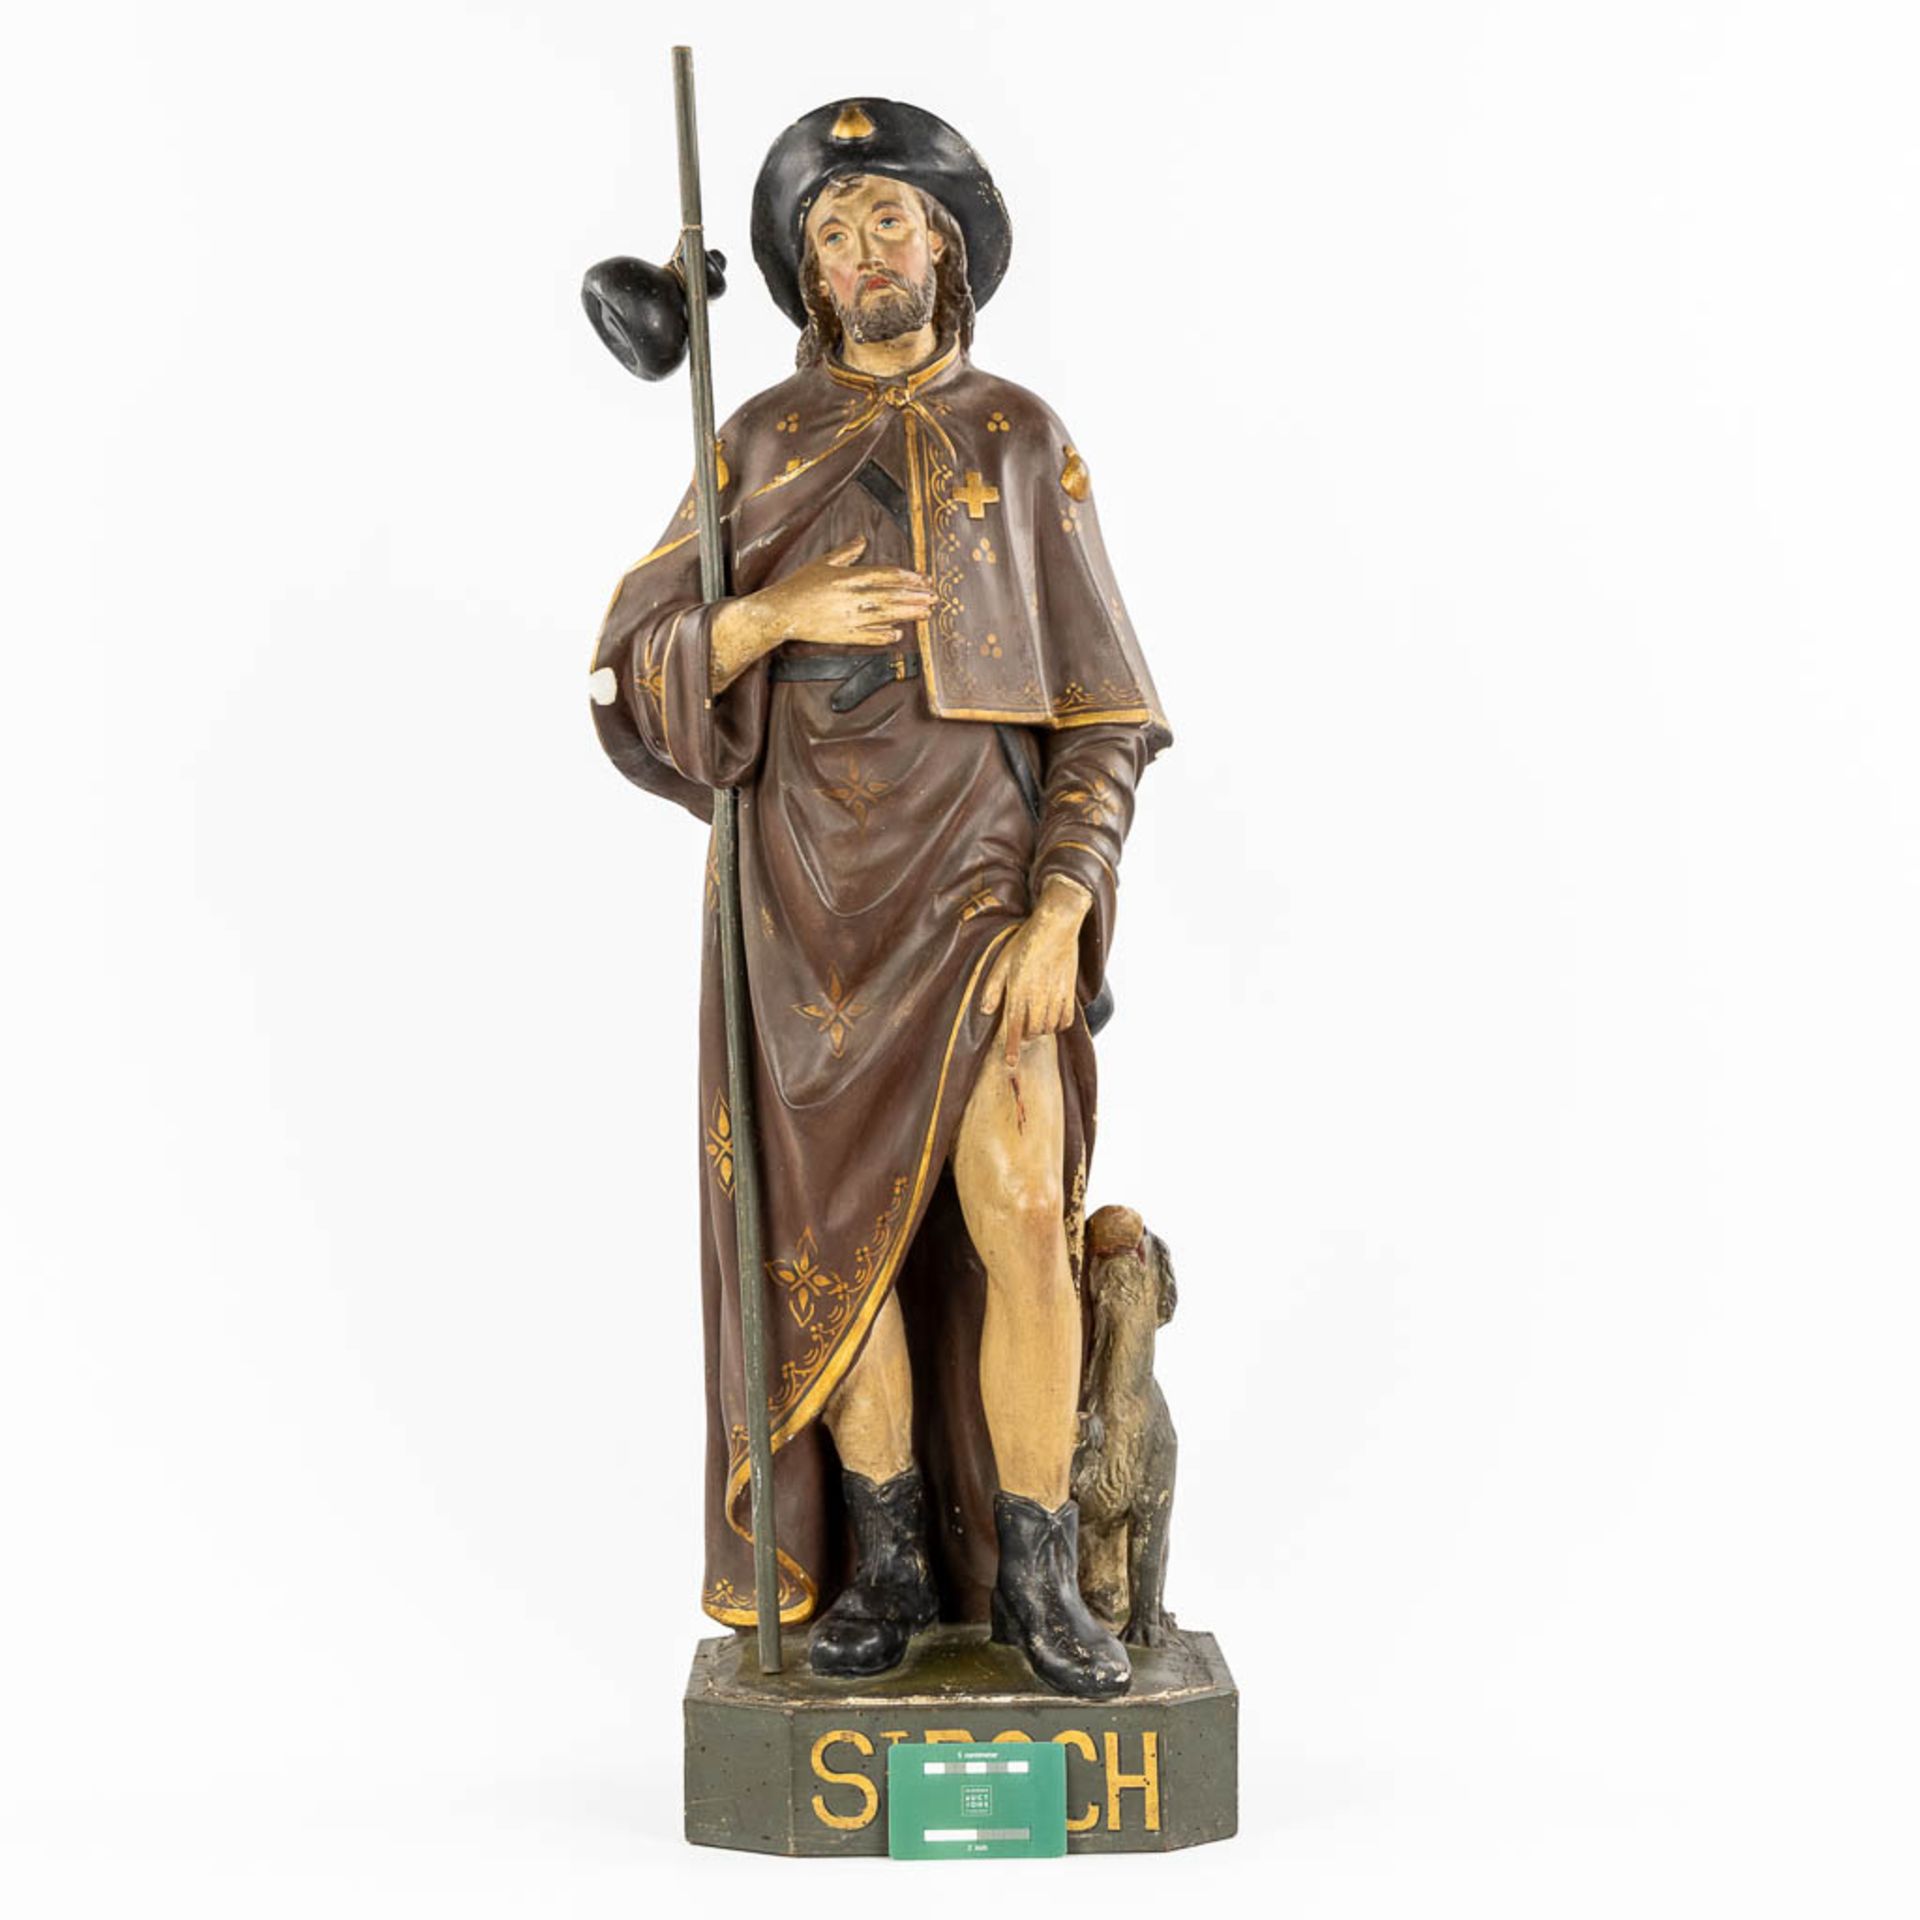 An antique figurine of Saint Rochus, patinated plaster. Circa 1900. (L:27 x W:27 x H:88 cm) - Image 2 of 16